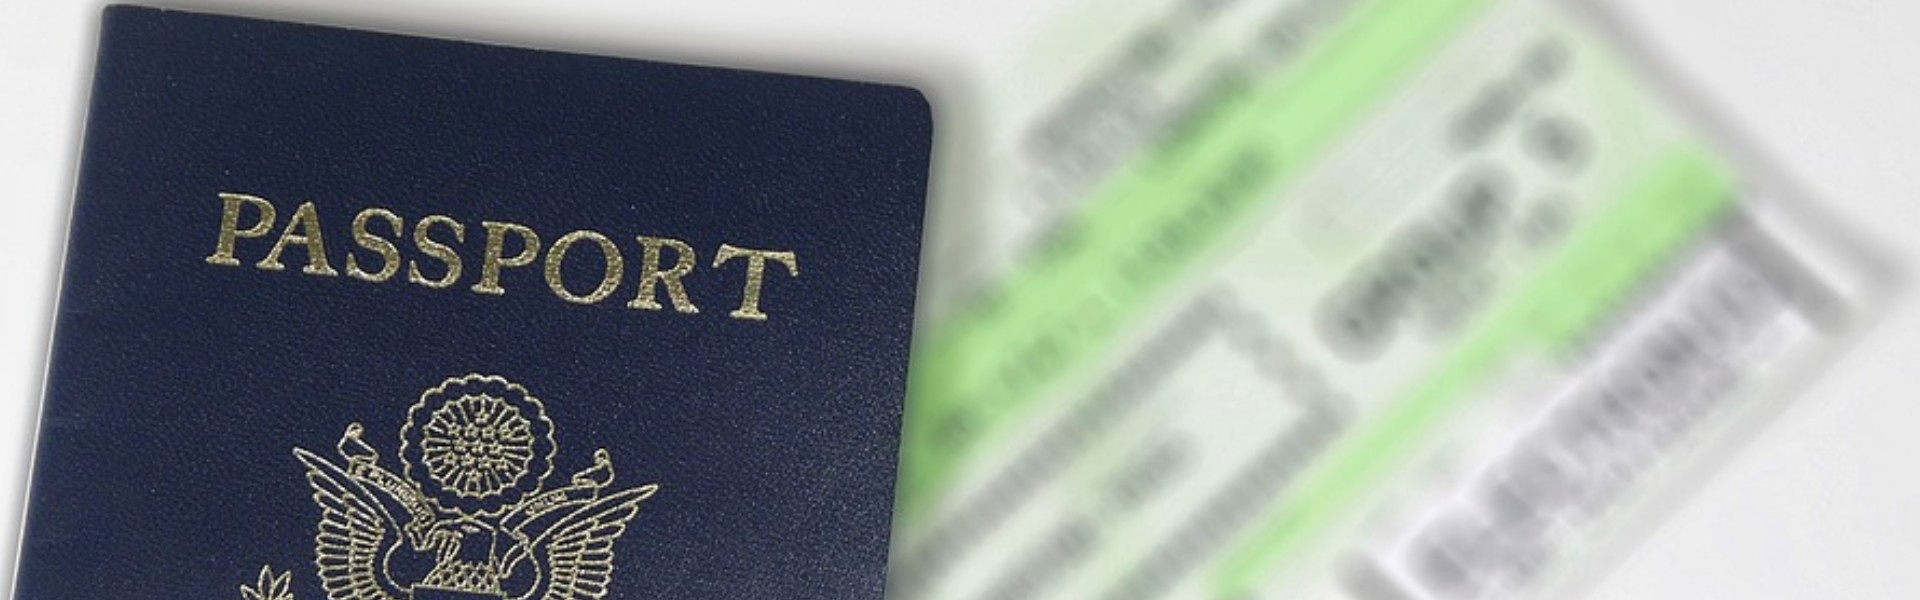 Passports and Visas for Tanzania